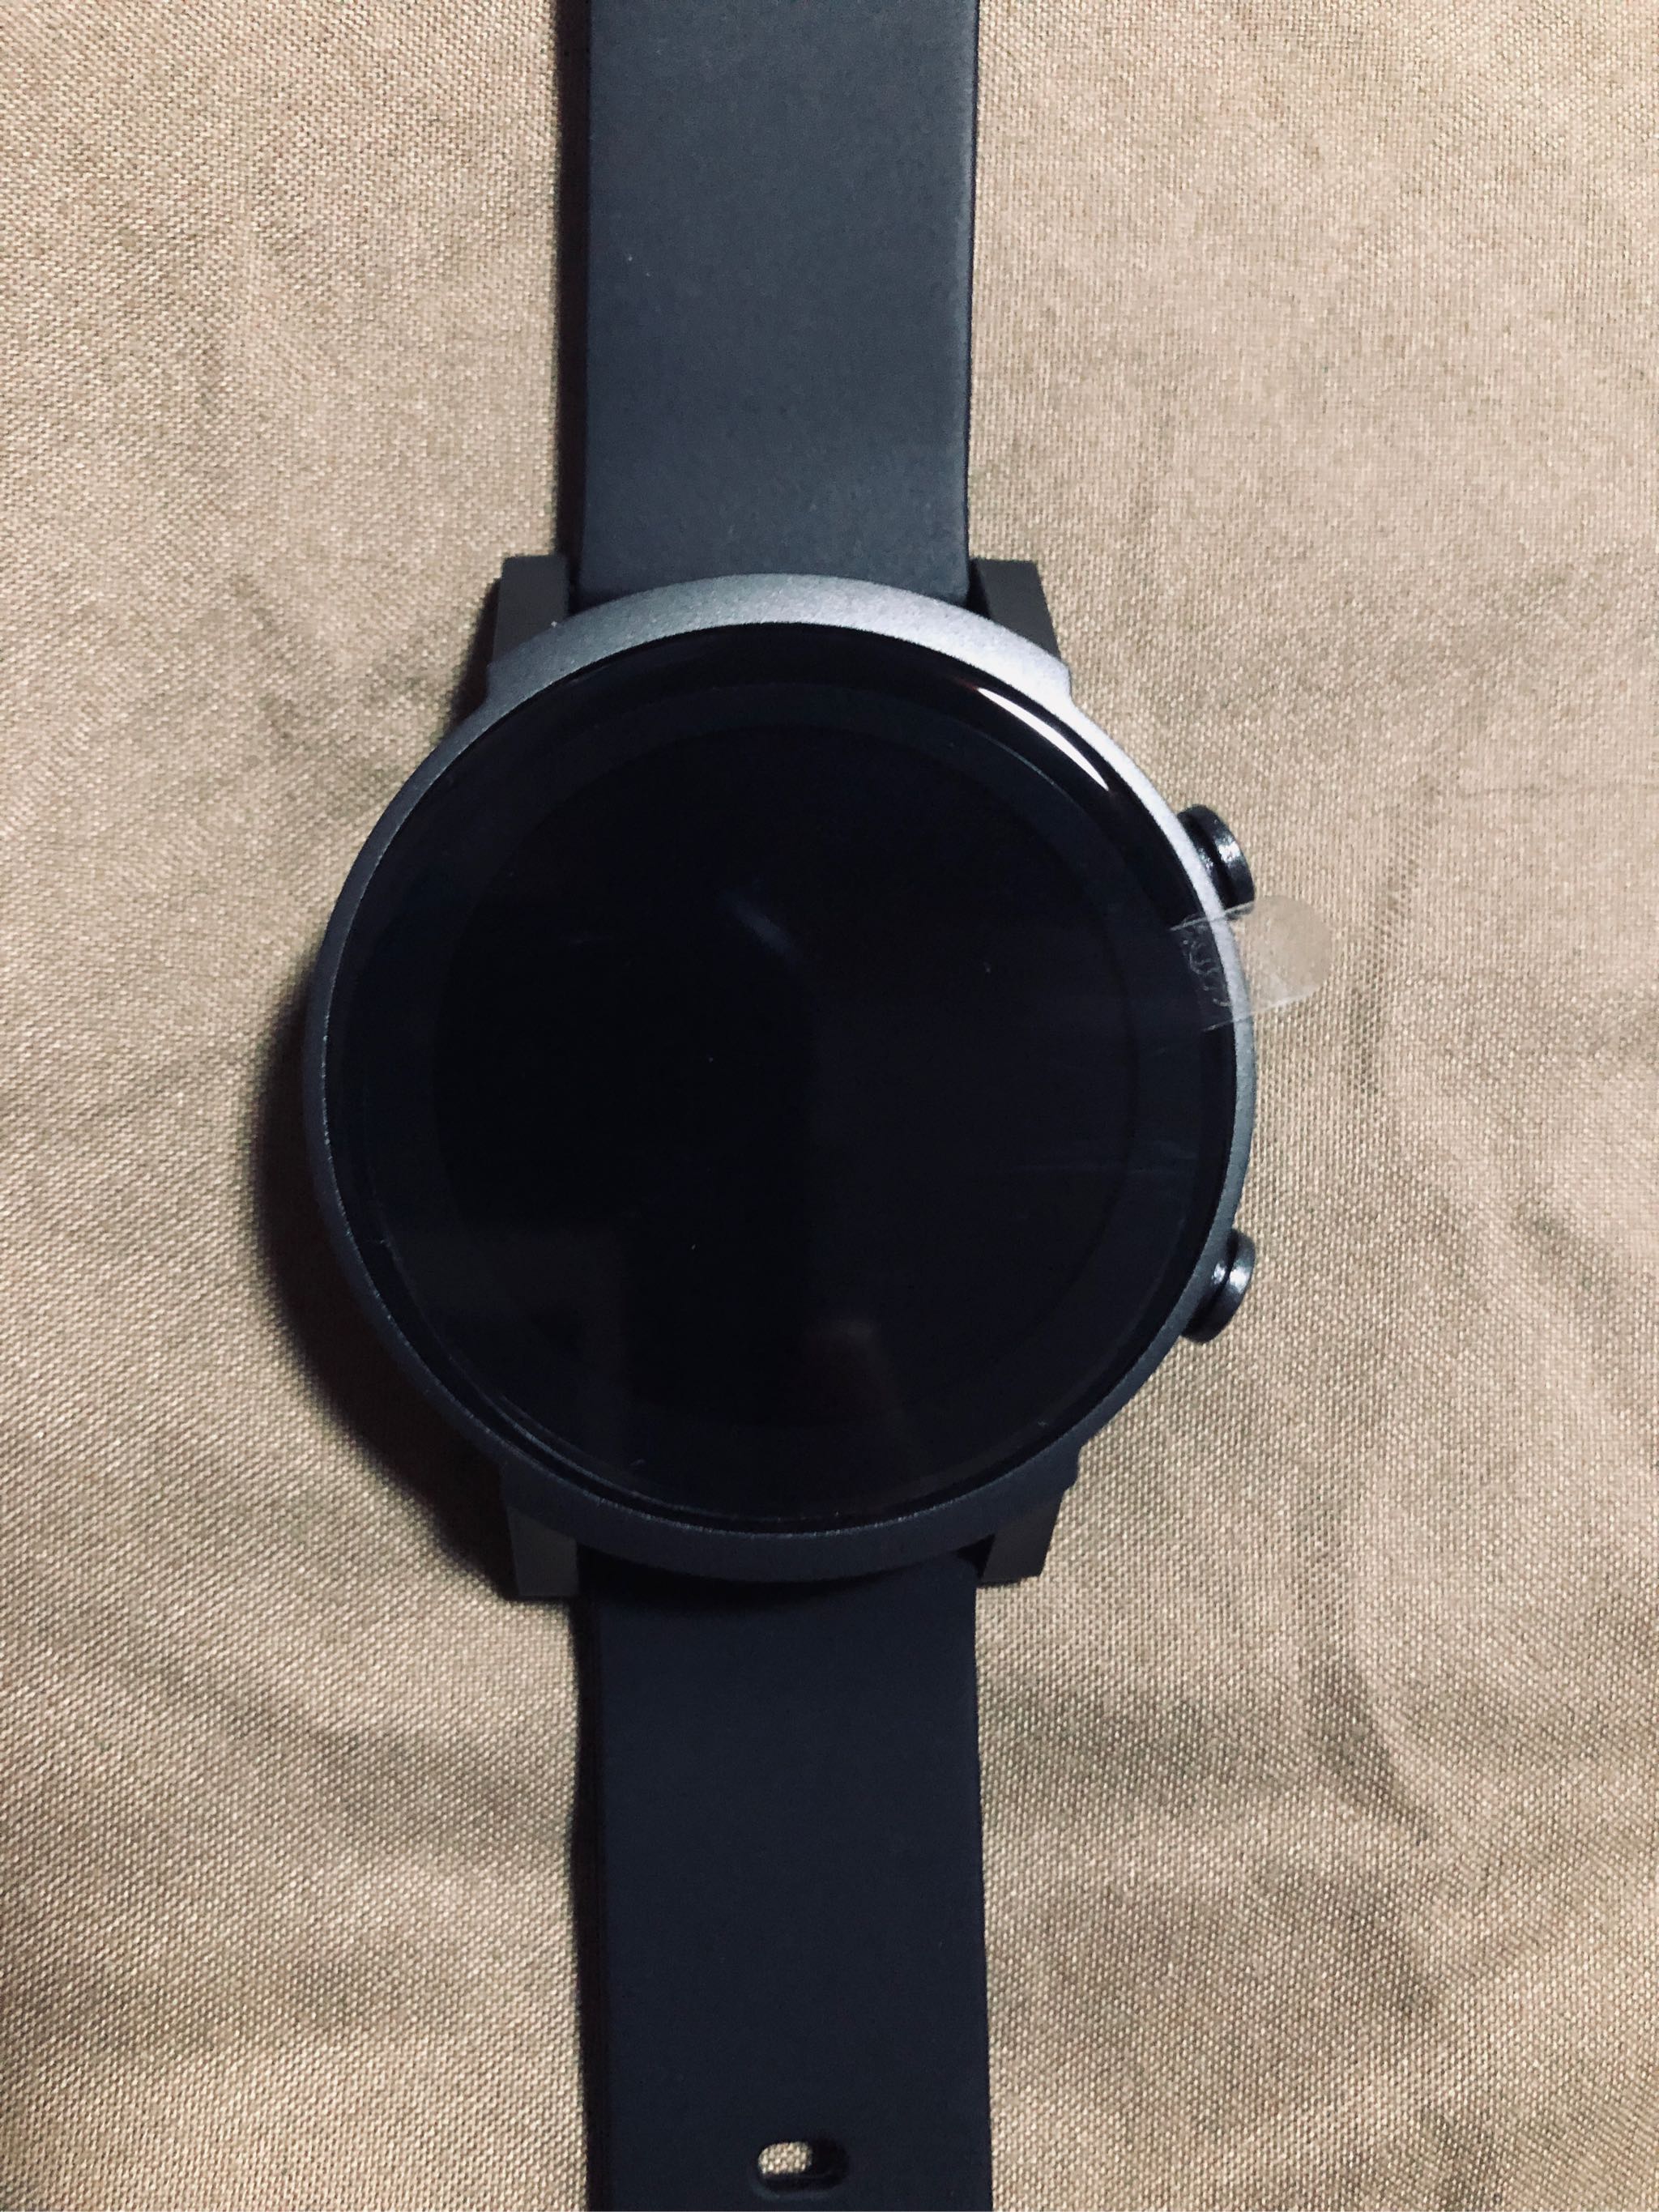  Ticwatch E3 Smart Watch Wear OS by Google for Men Women Plus  20mm Width Black Leather Replacement Watchband, Qualcomm Snapdragon Wear  4100 Platform Health Monitor Fitness Tracker GPS NFC Mic Speaker 